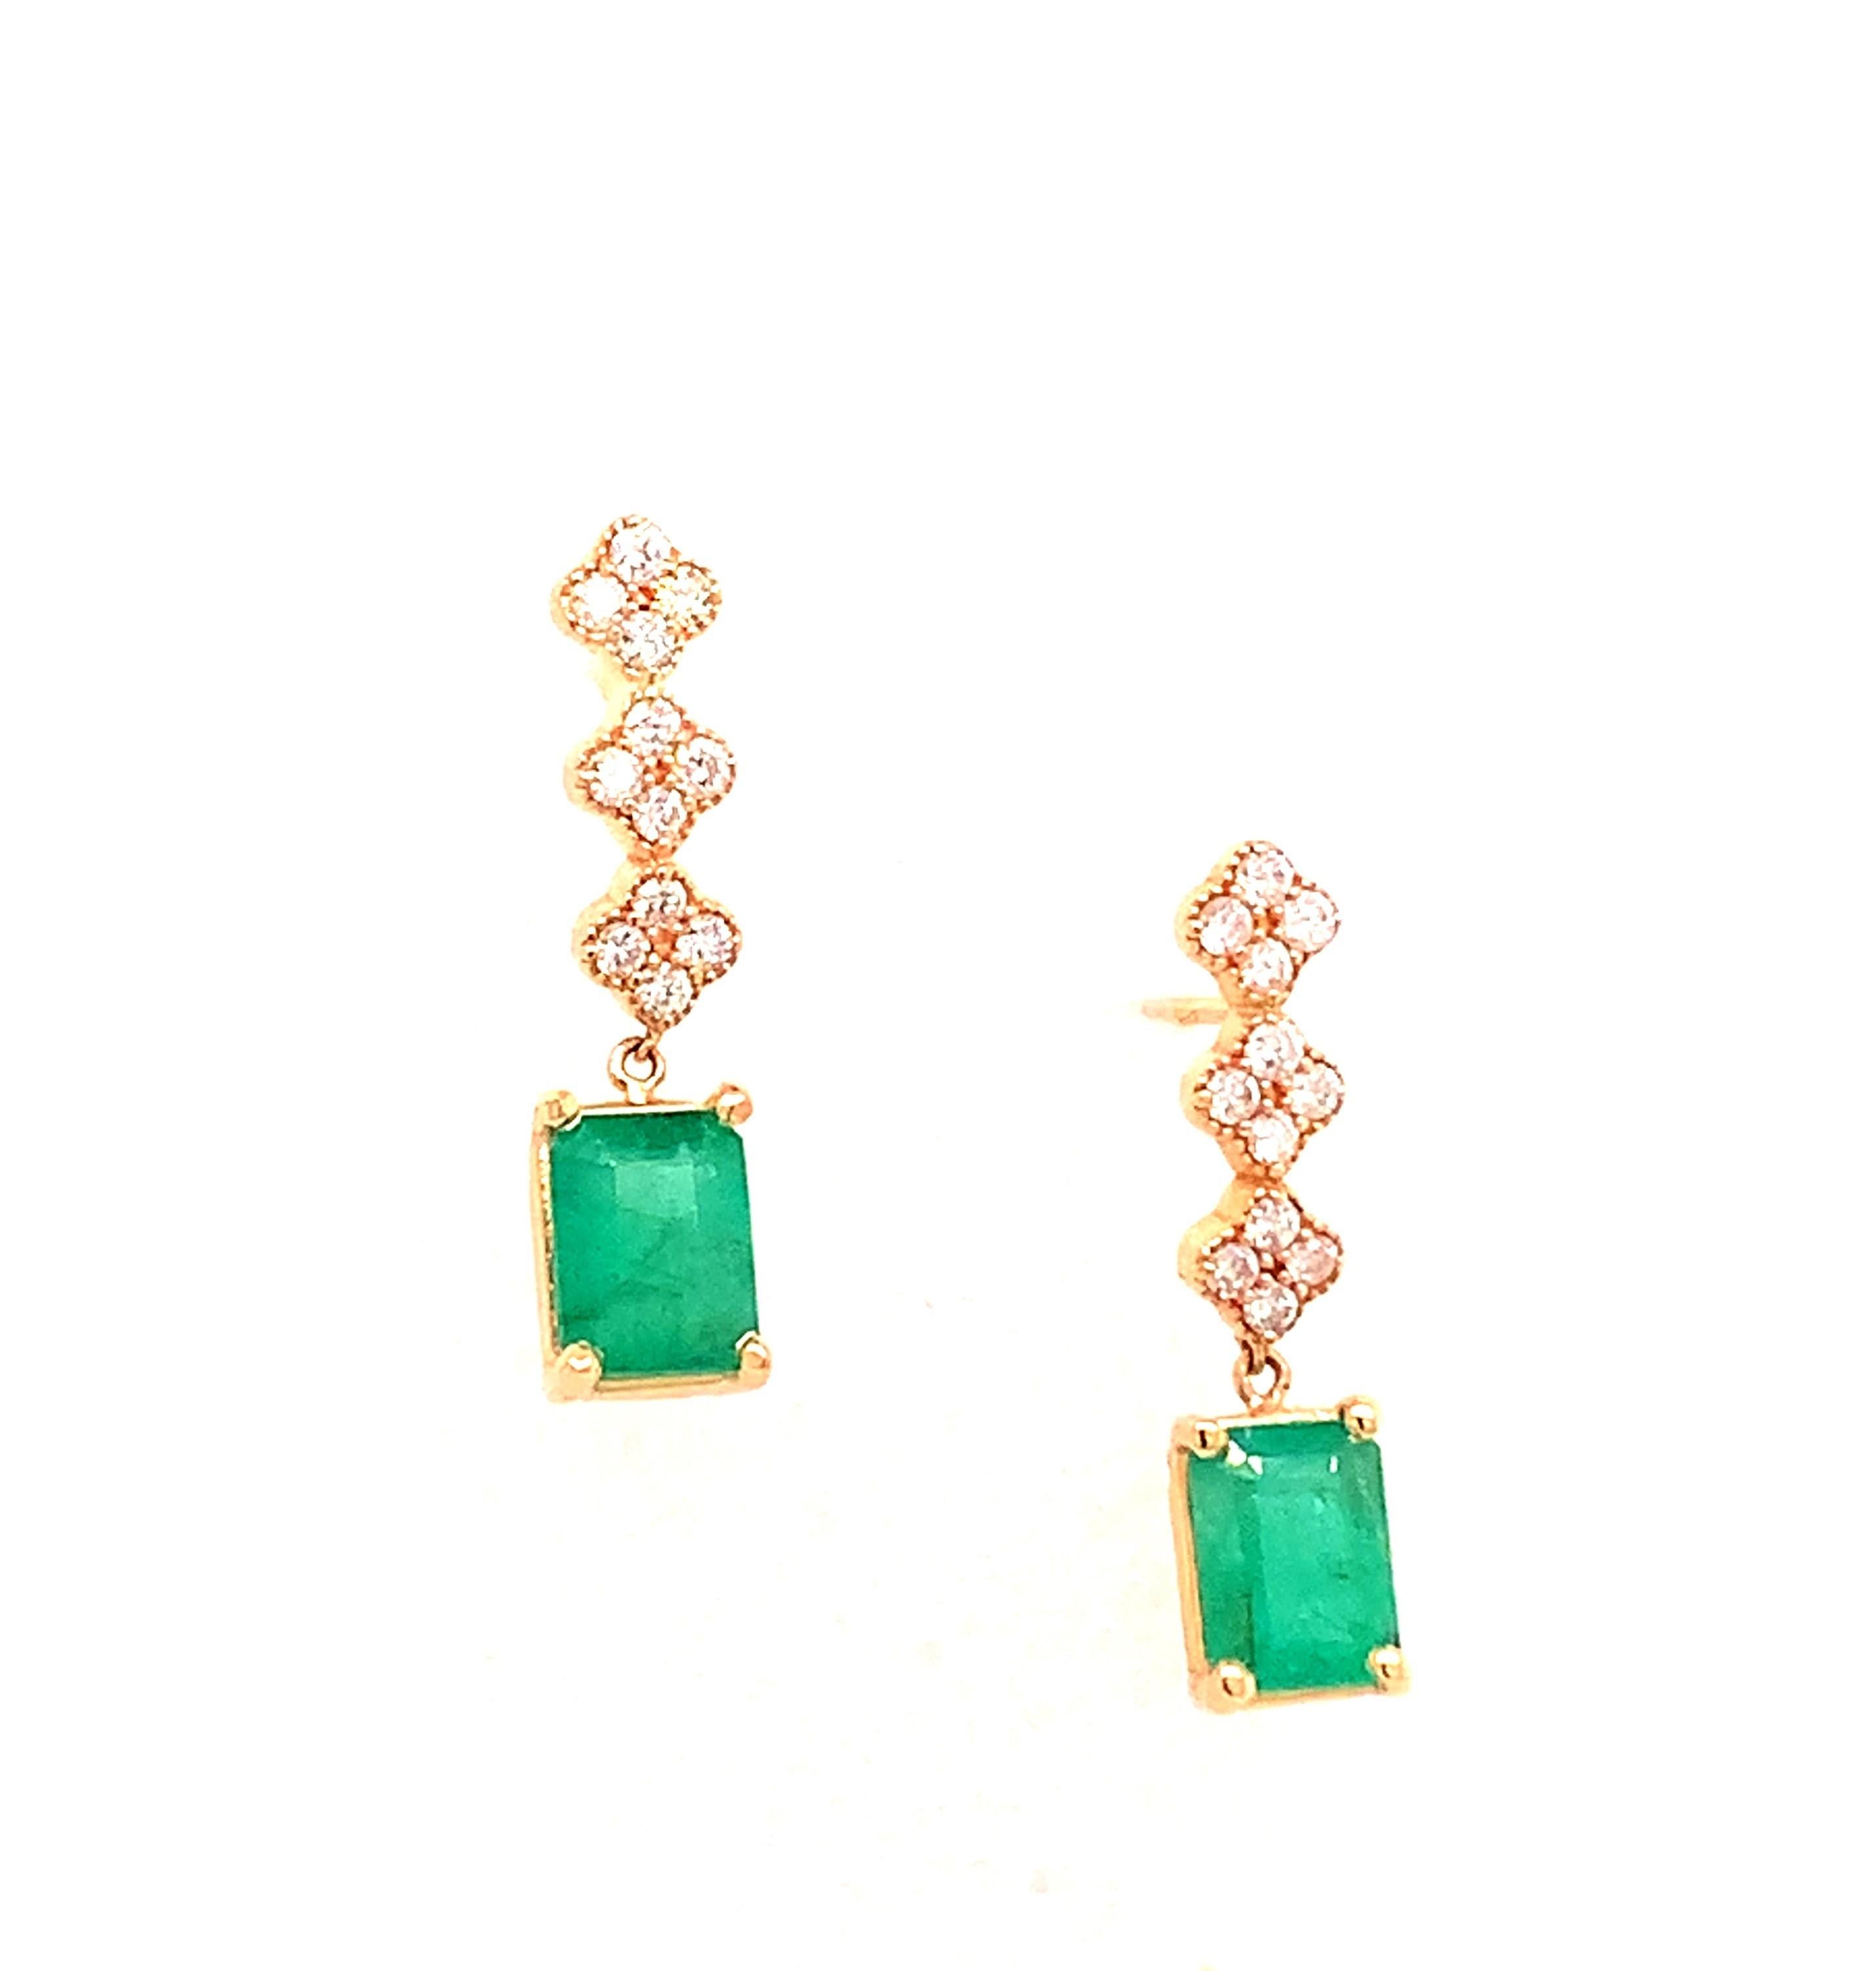 Natural Emerald Diamond Earrings 14k Gold 3.25 TCW Certified 1